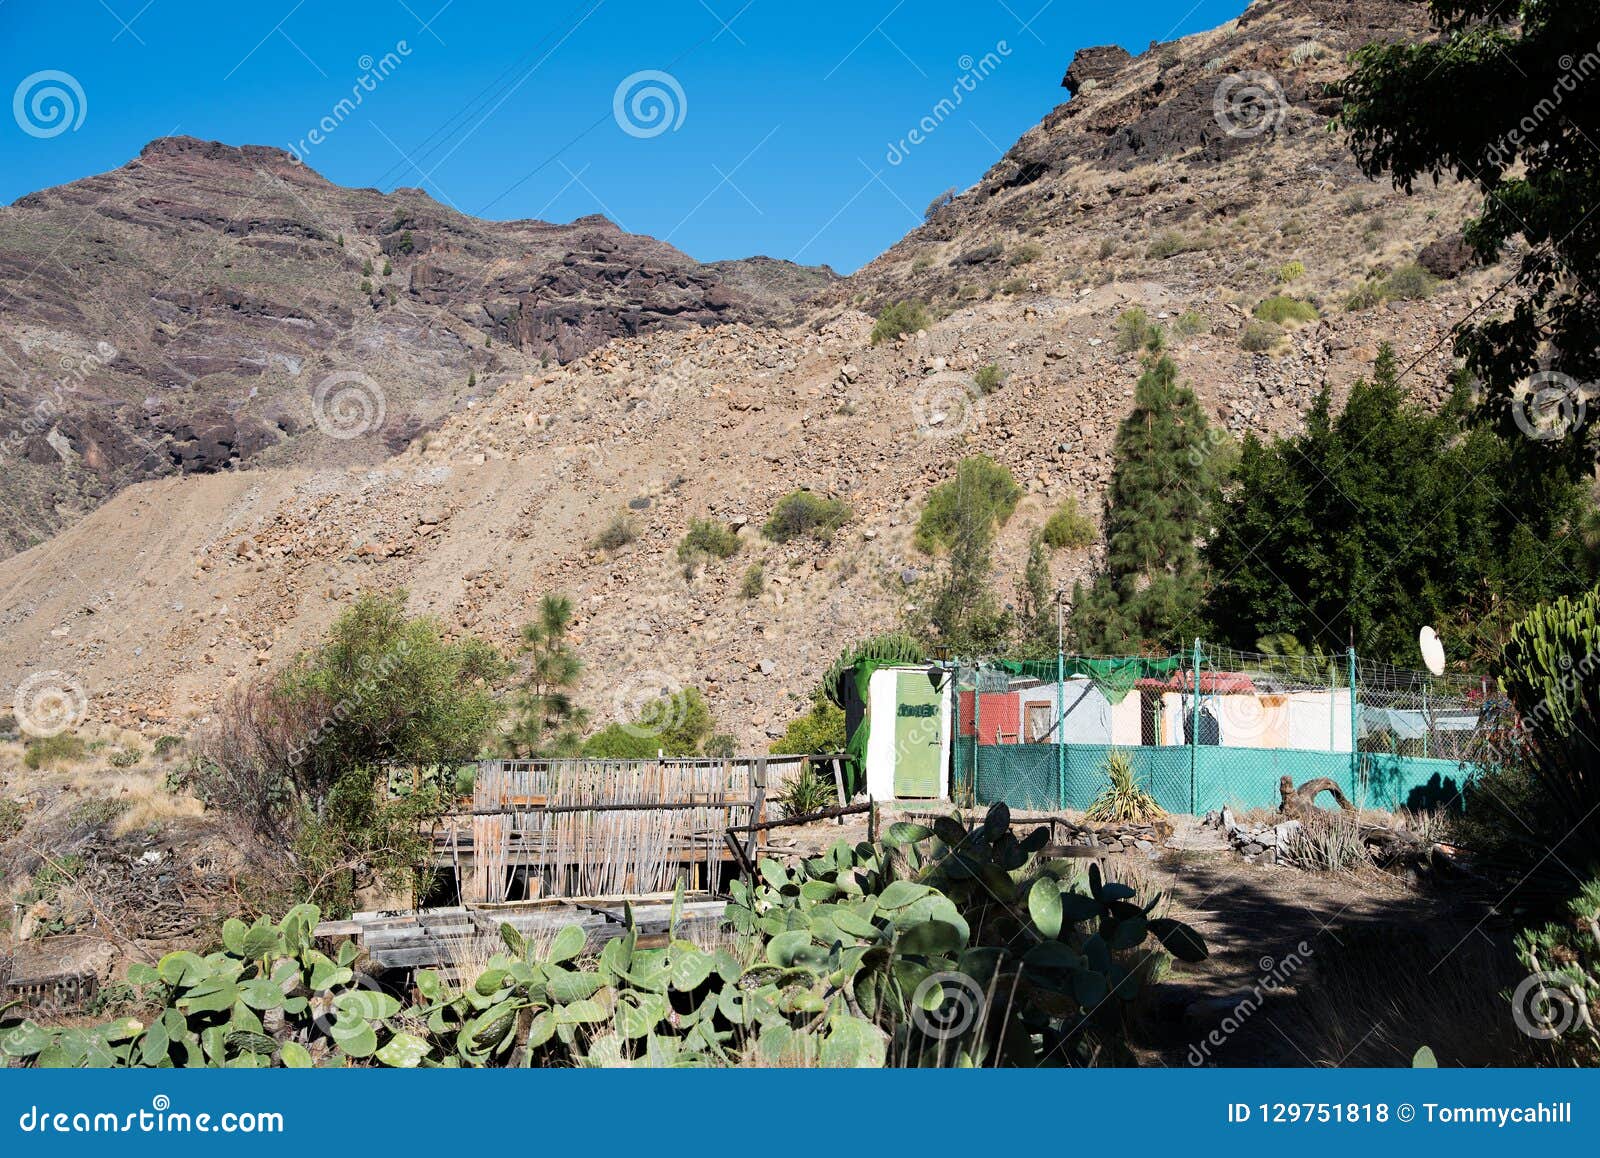 small country house in baranco del vaquero